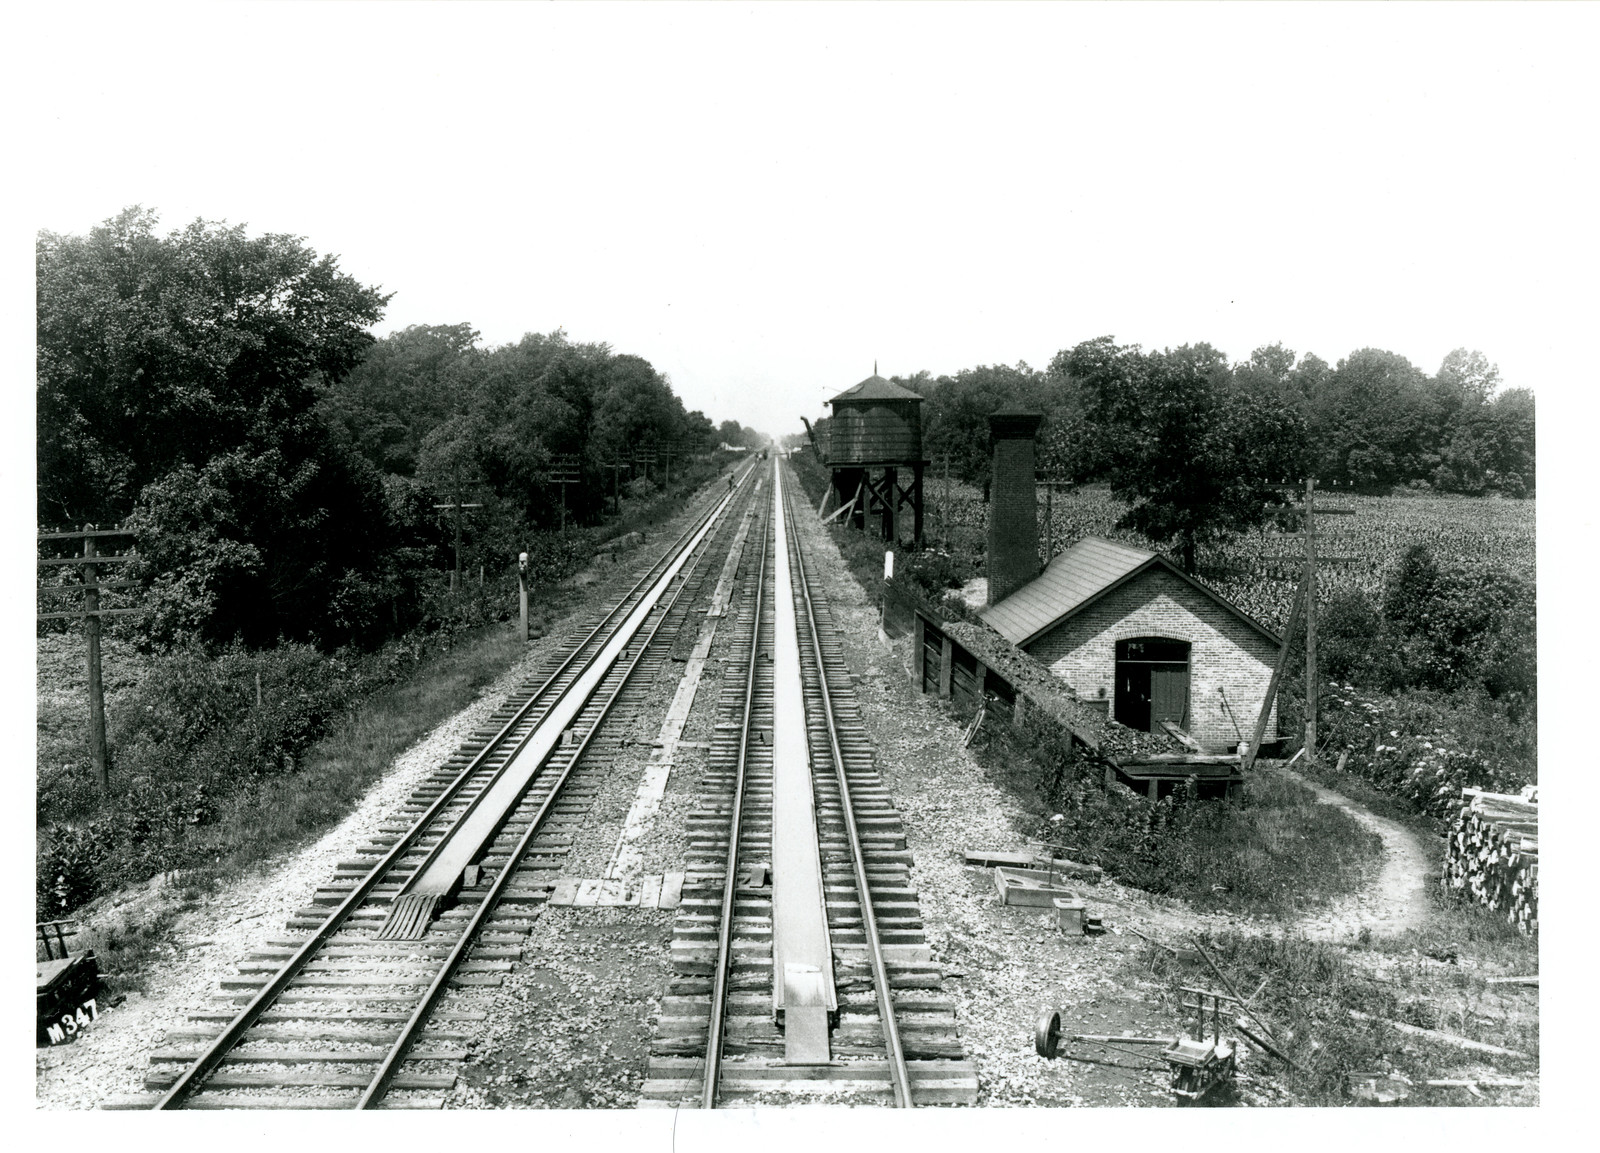 Lake Shore and Michigan Southern Railway, July 11, 1906 - Burdick, Indiana